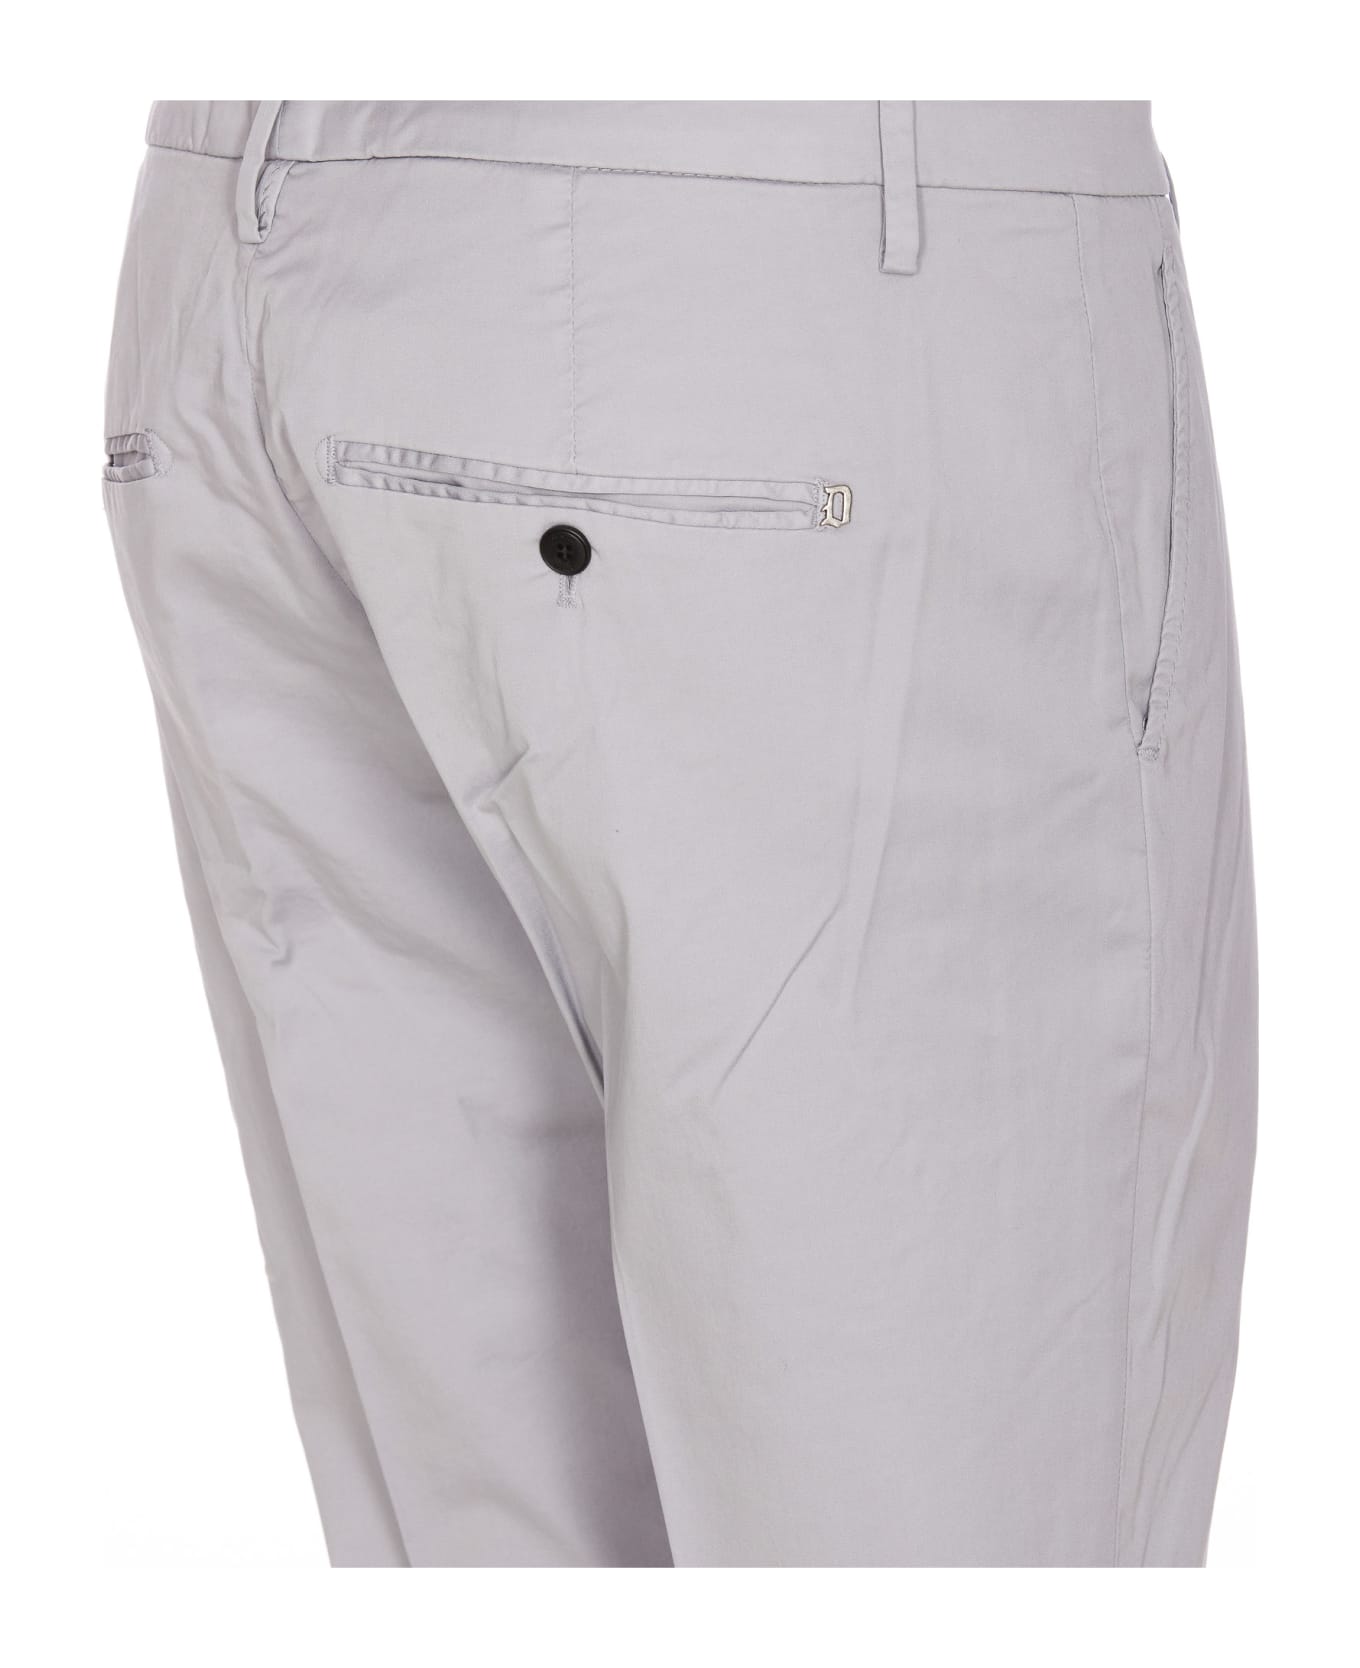 Dondup Gray Chino Trousers - Grey